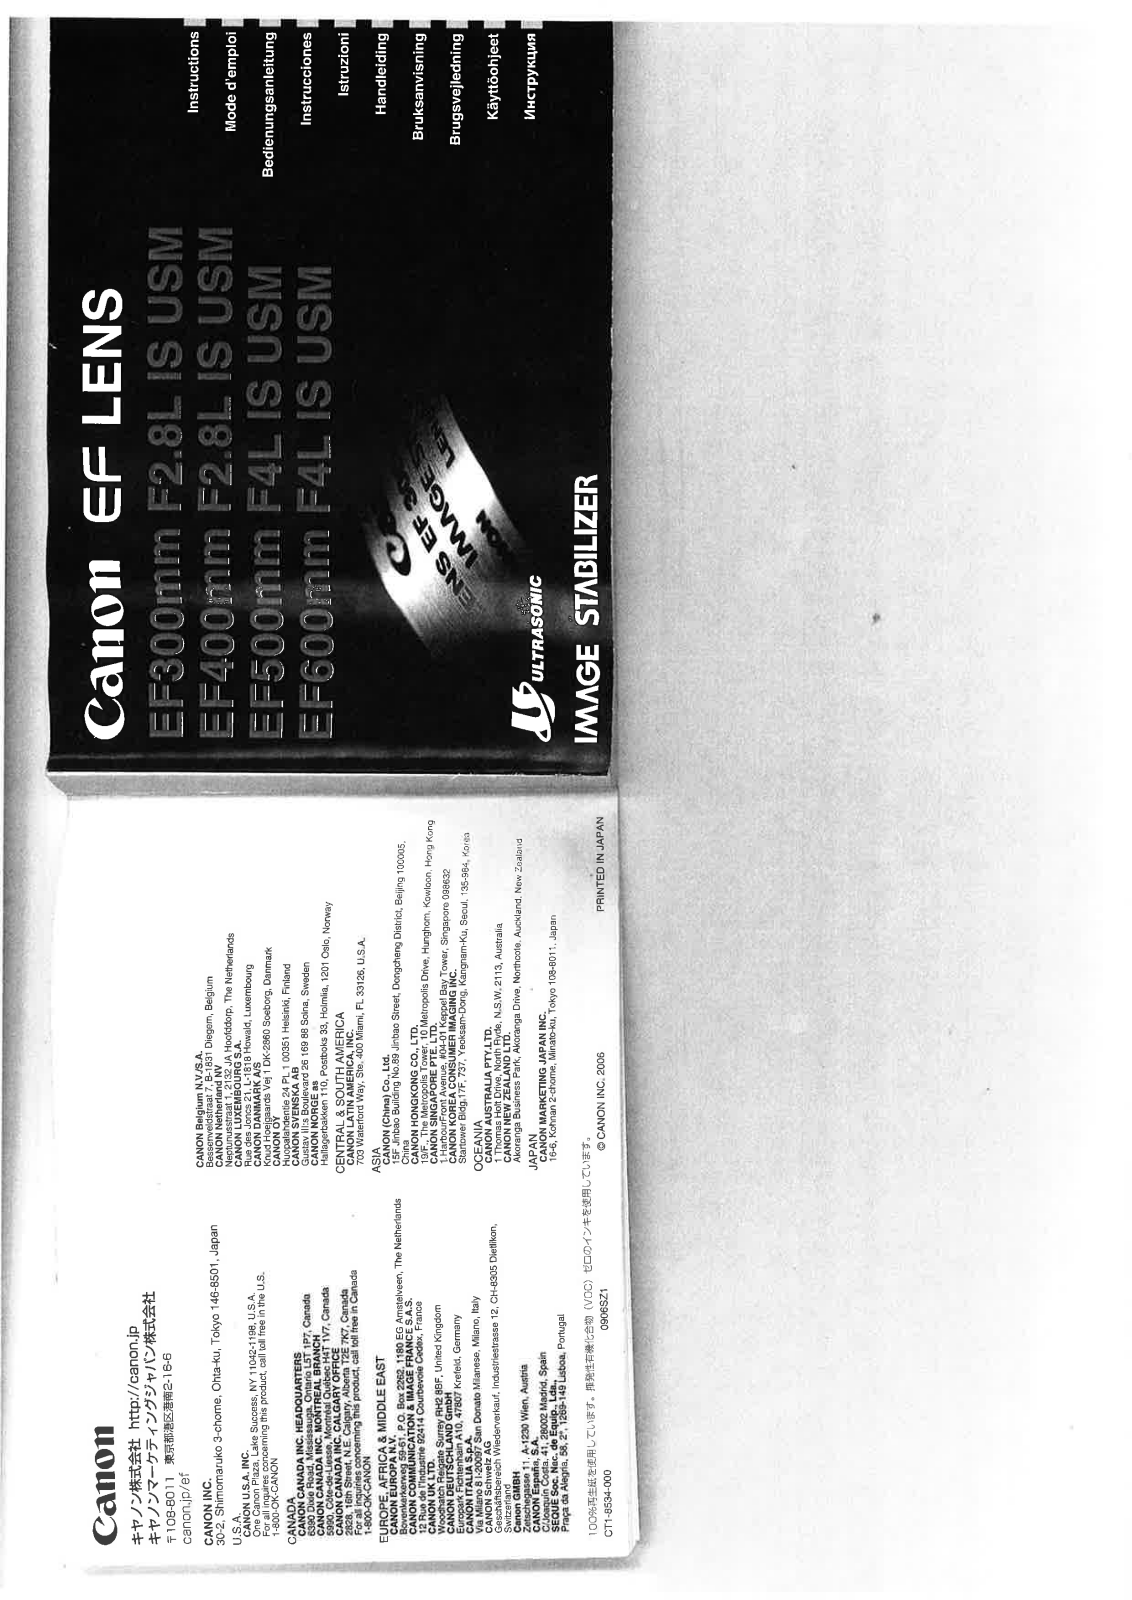 Canon EF300 User Manual